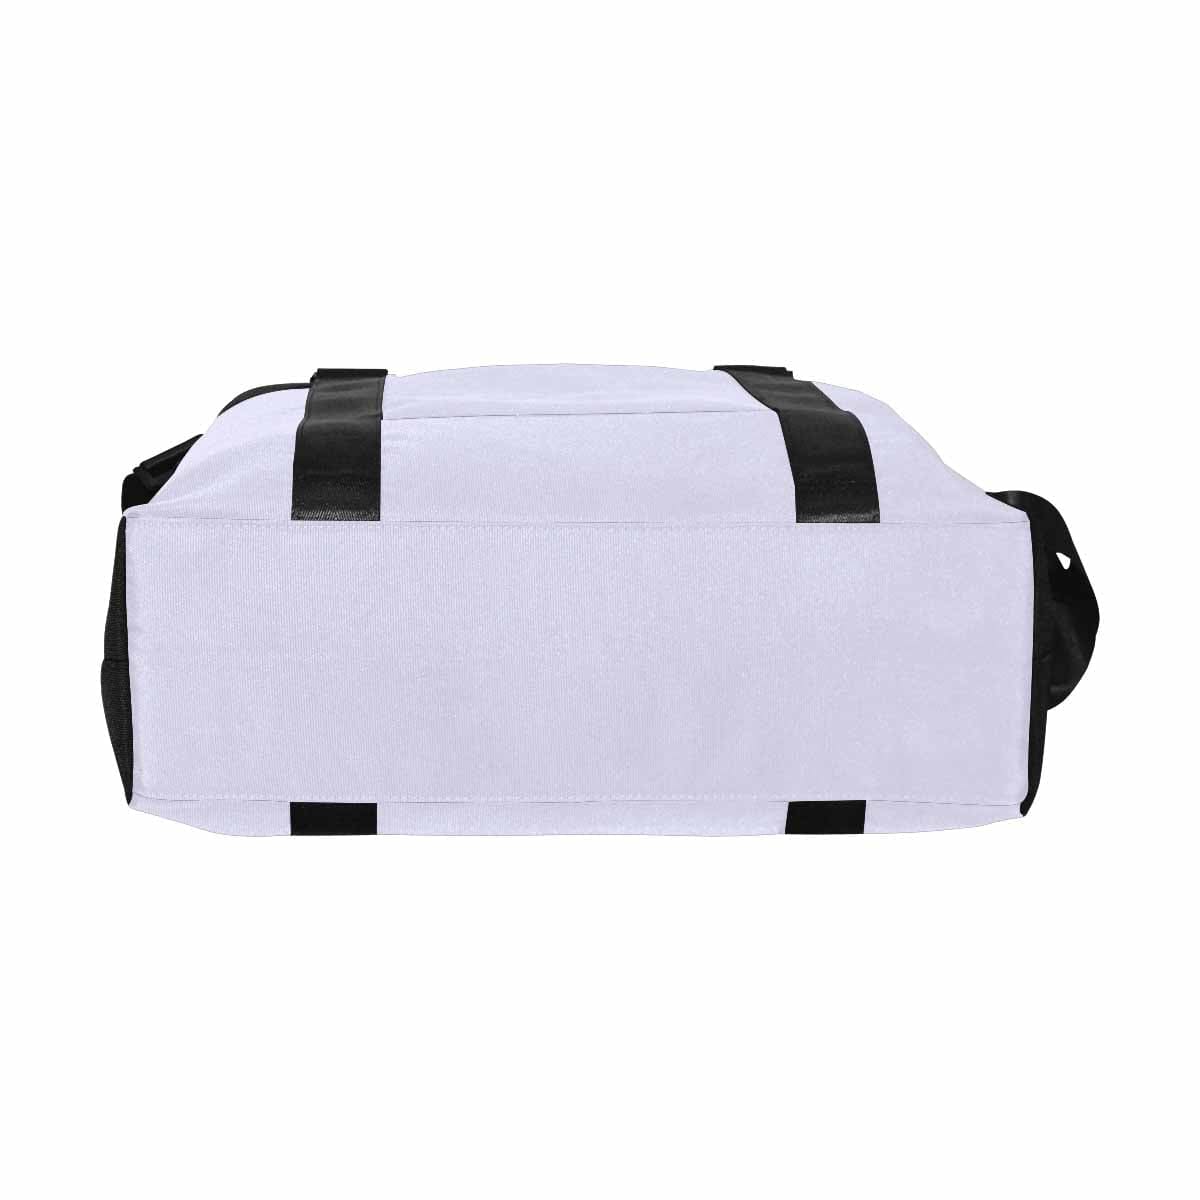 Lavender Purple Duffel Bag Large Travel Carry On - Bags | Duffel Bags